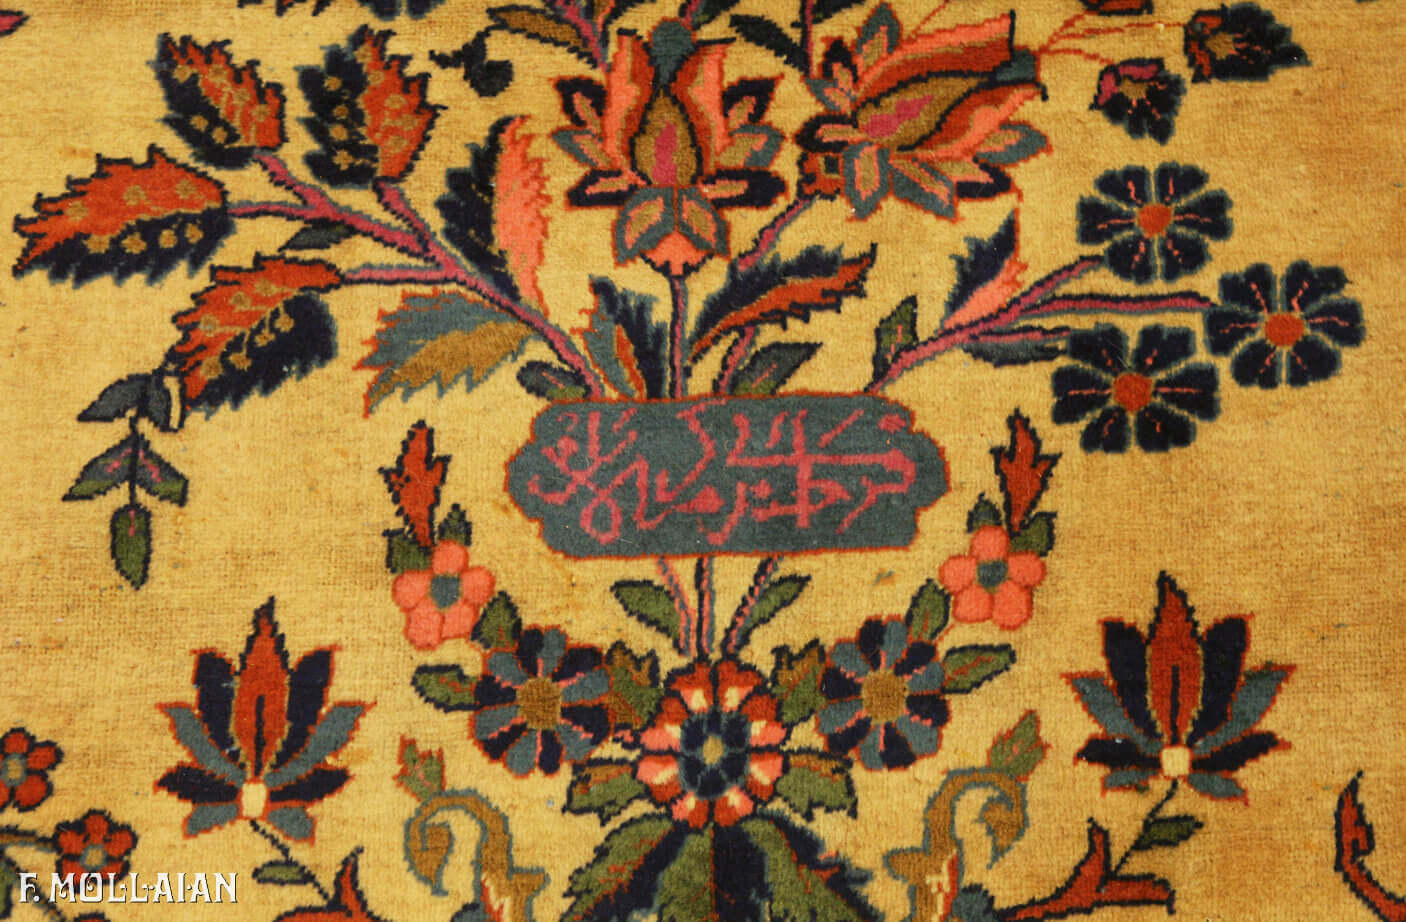 Antique Persian Kashan Manchester Carpet n°:71241500